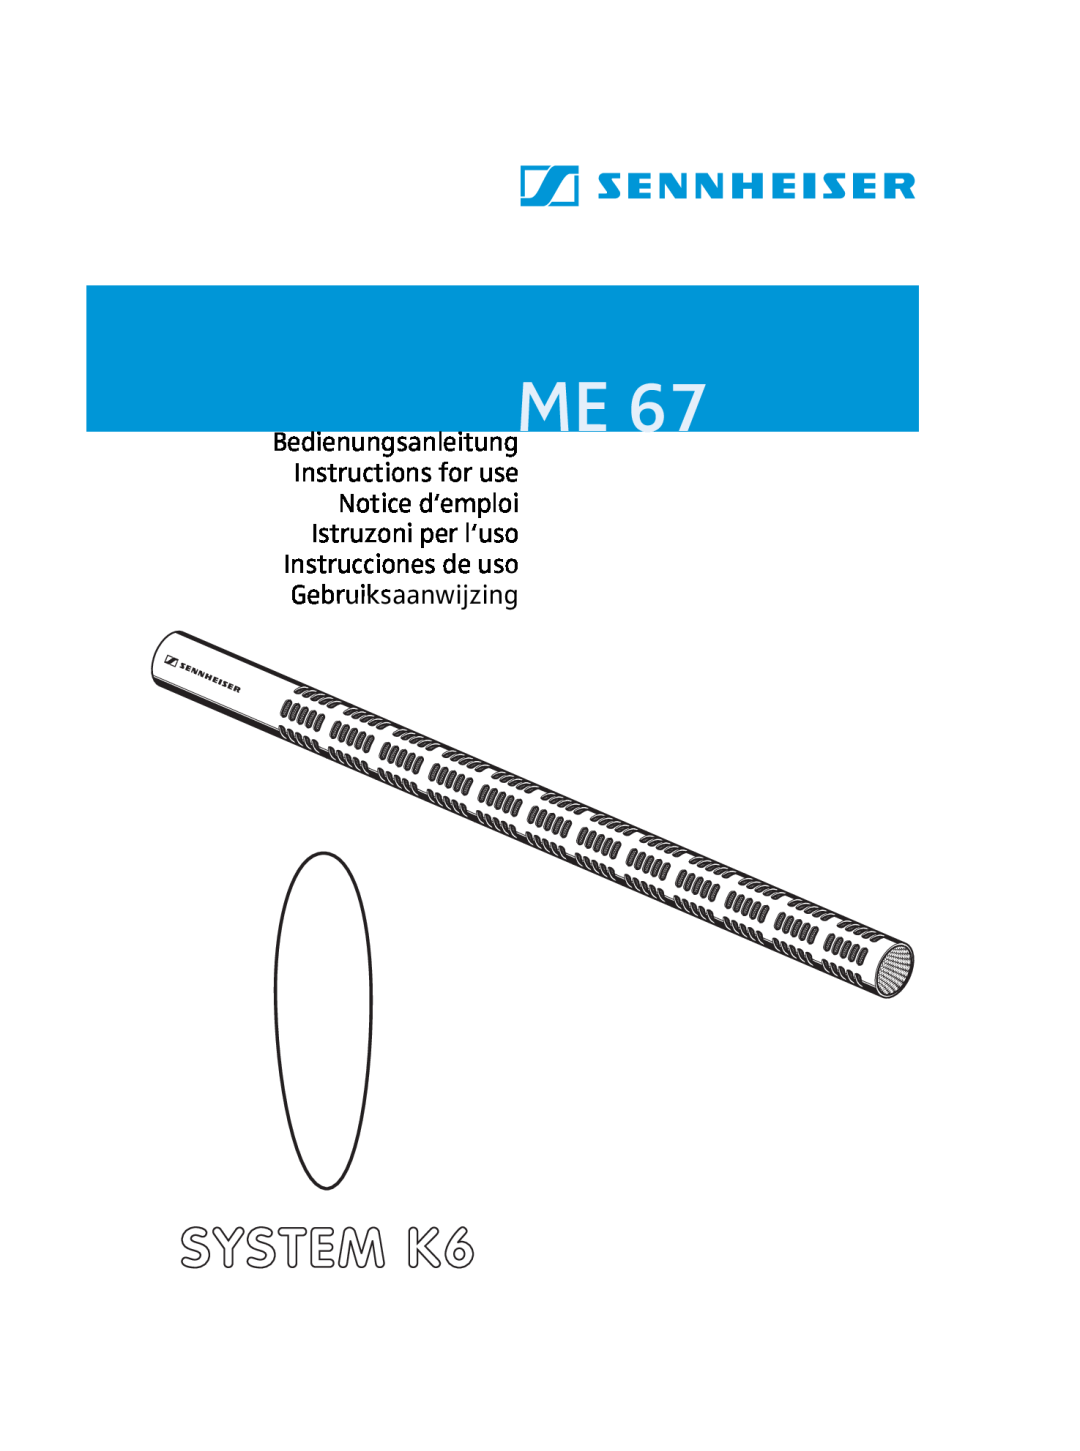 Sennheiser ME 67 manual SYSTEM K6, Bedienungsanleitung Instructions for use Notice d‘emploi 